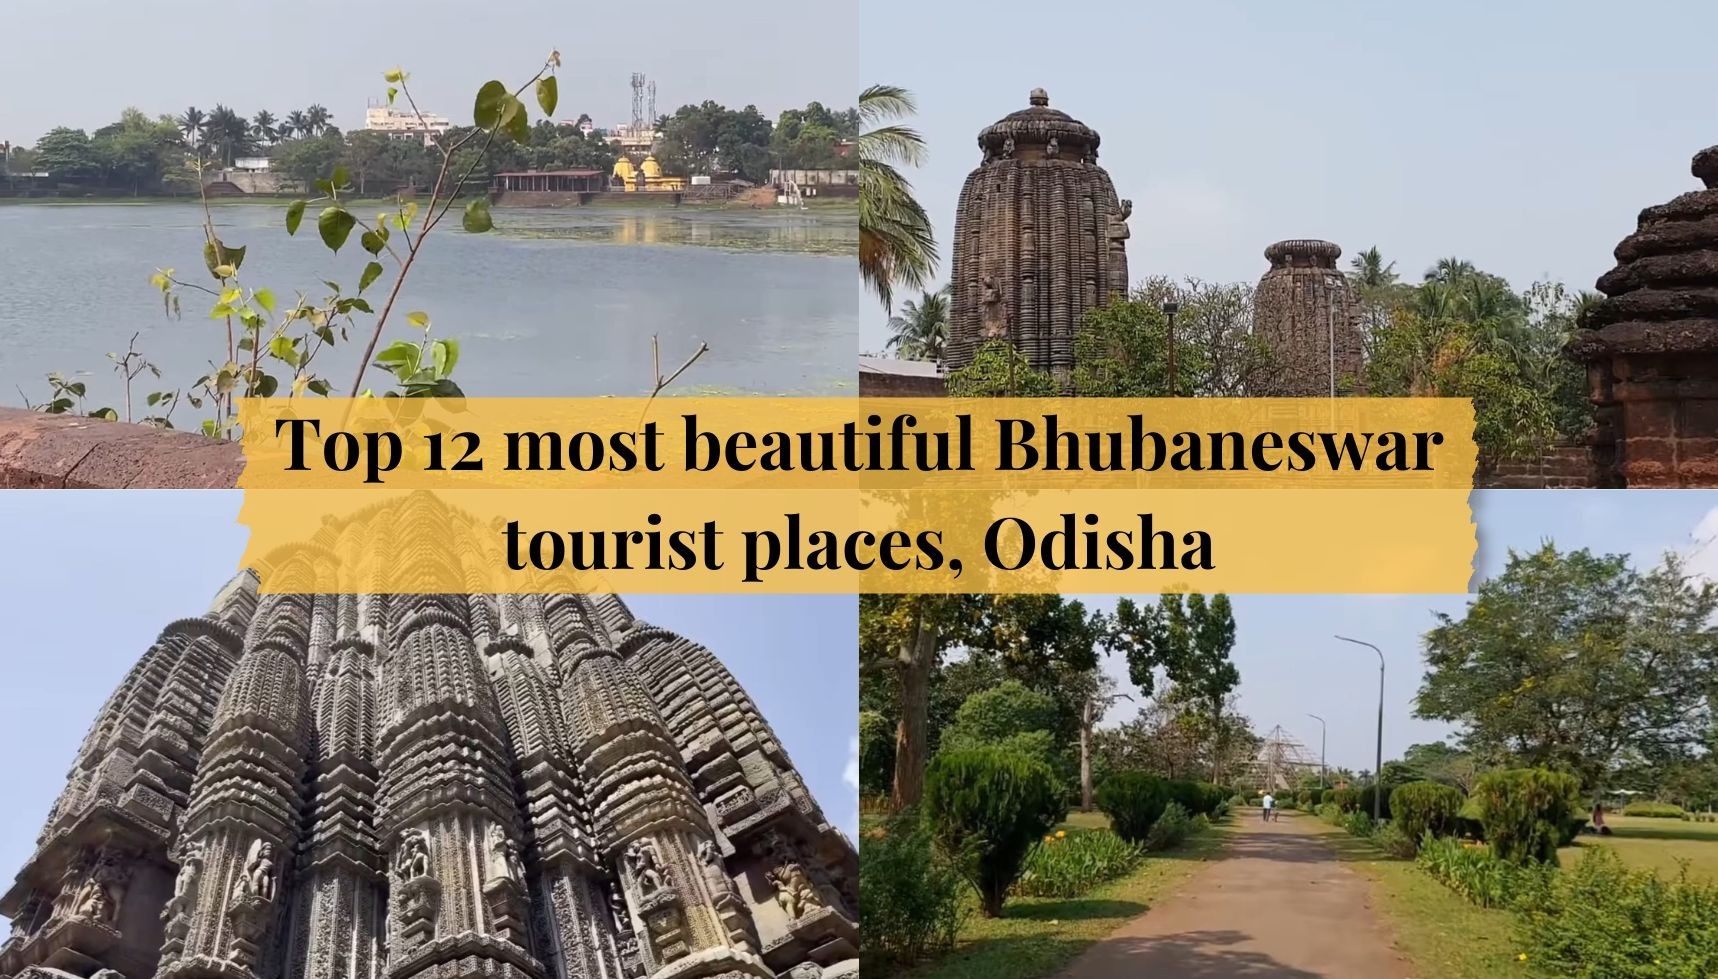 Top 12 Most Beautiful Bhubaneswar Tourist Places, Odisha